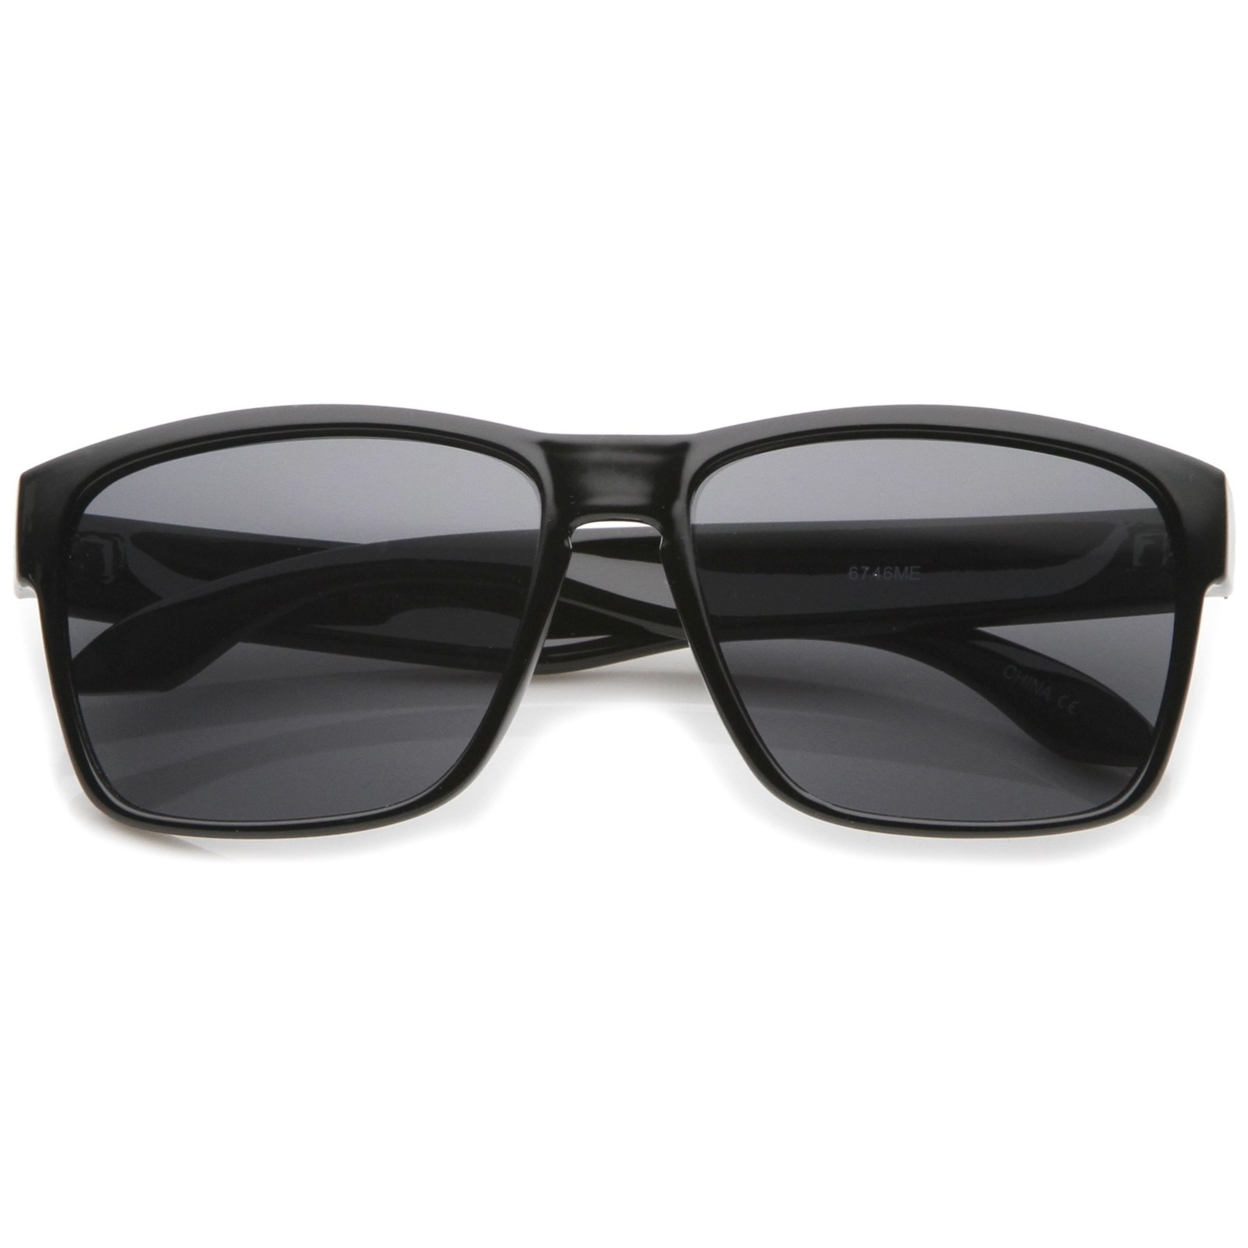 Action Sport Modern Lifestyle Frame Rectangle Sunglasses 59mm - Matte Black / Smoke